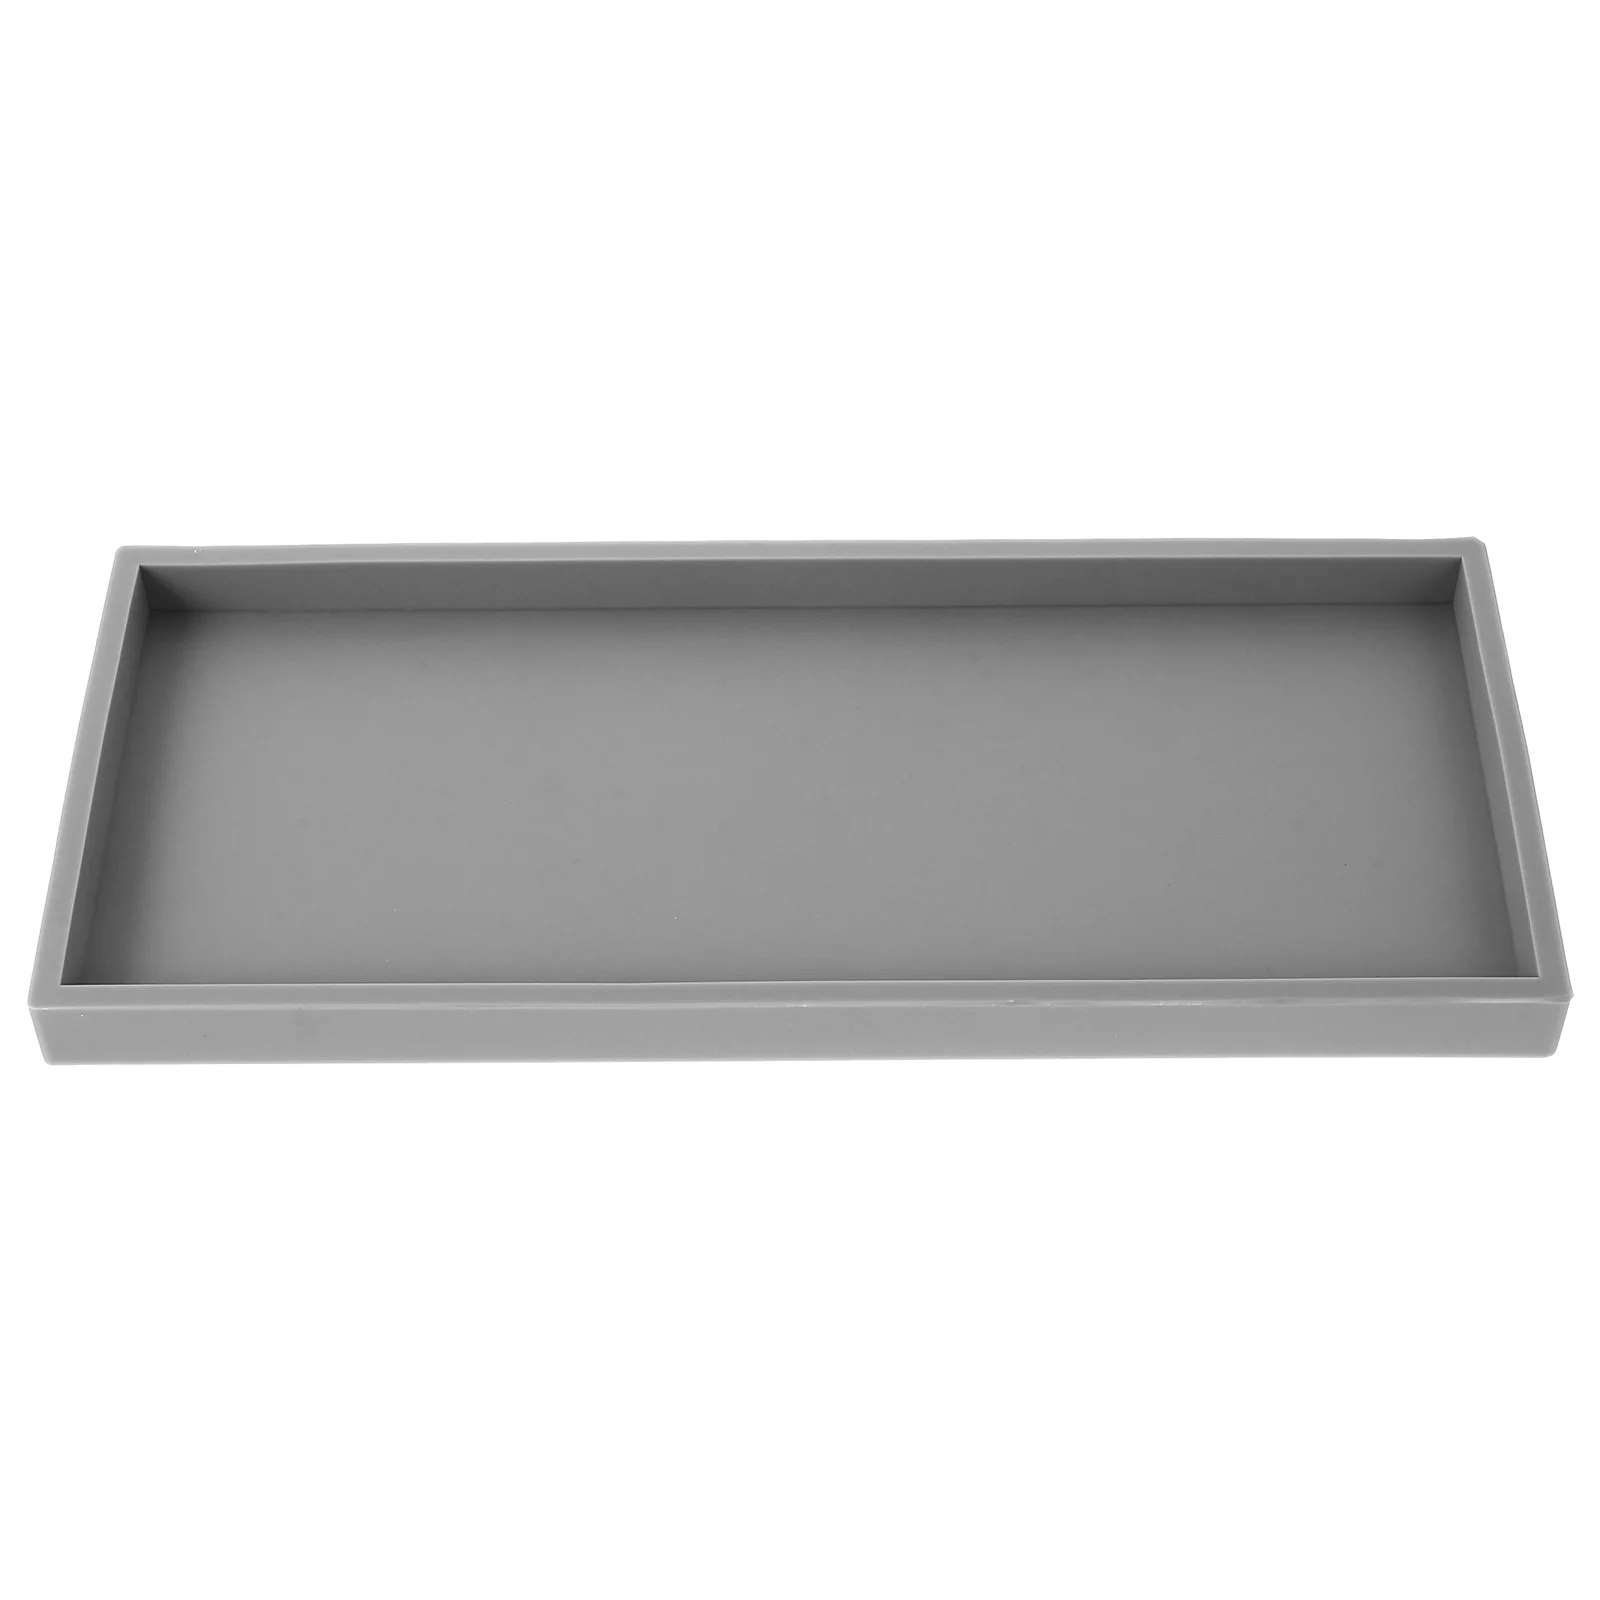 

Silicone Tray Kitchen Soap Delicate Gray Silica Gel Bathroom Vanity Trays Counter